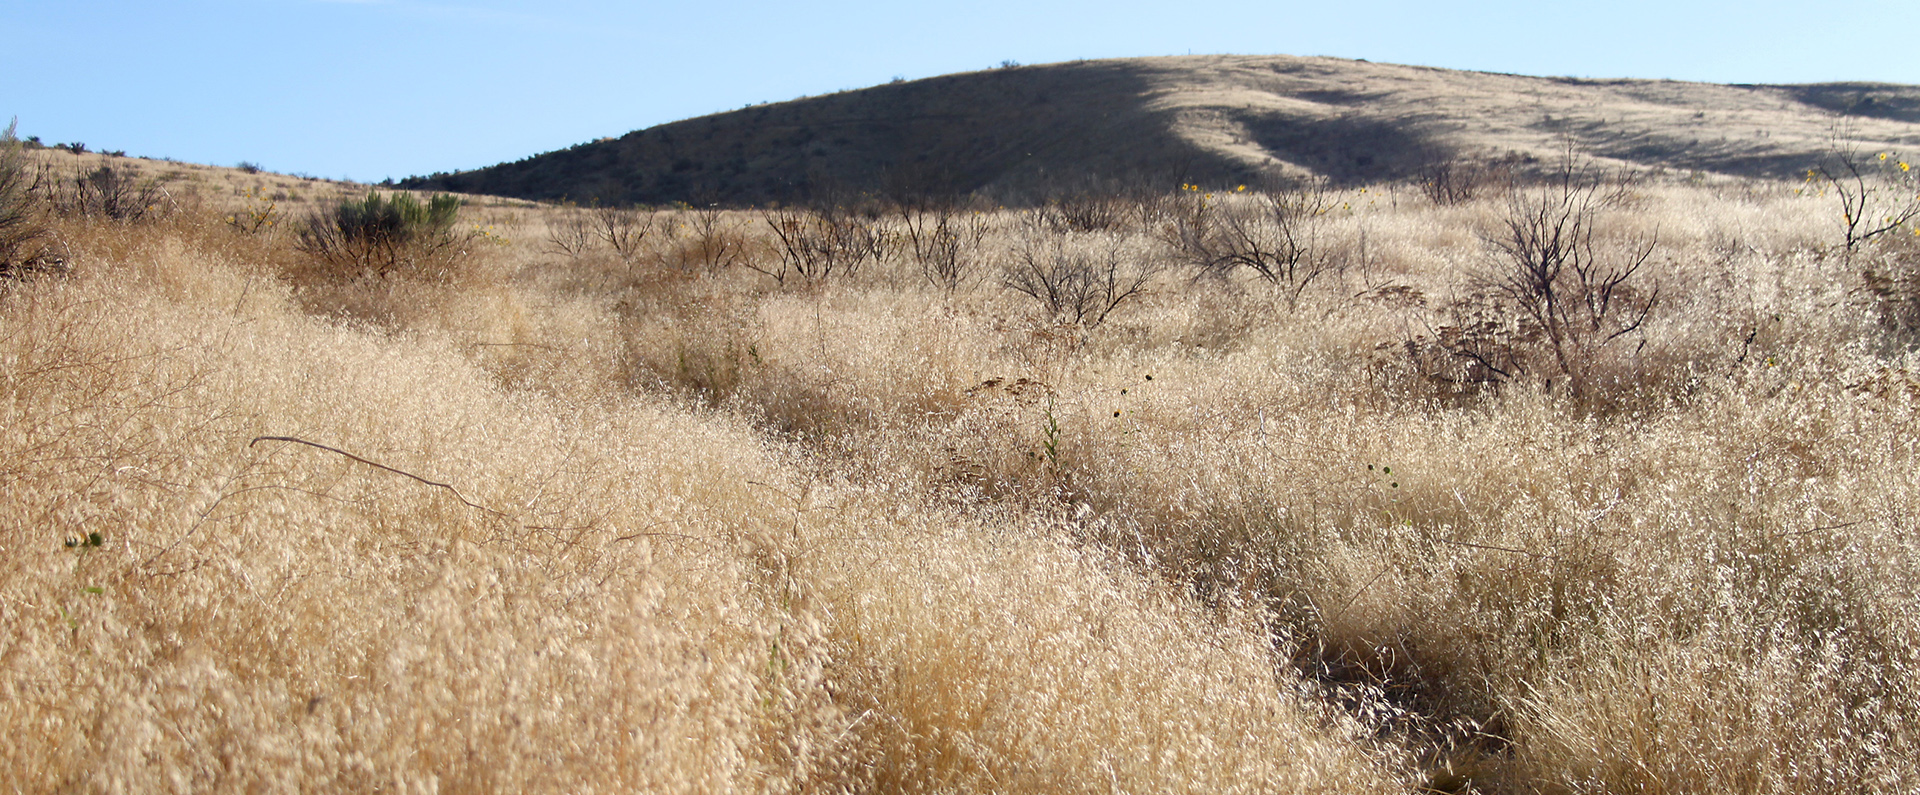 sagebrush steppe rangeland where cheatgrass has invaded